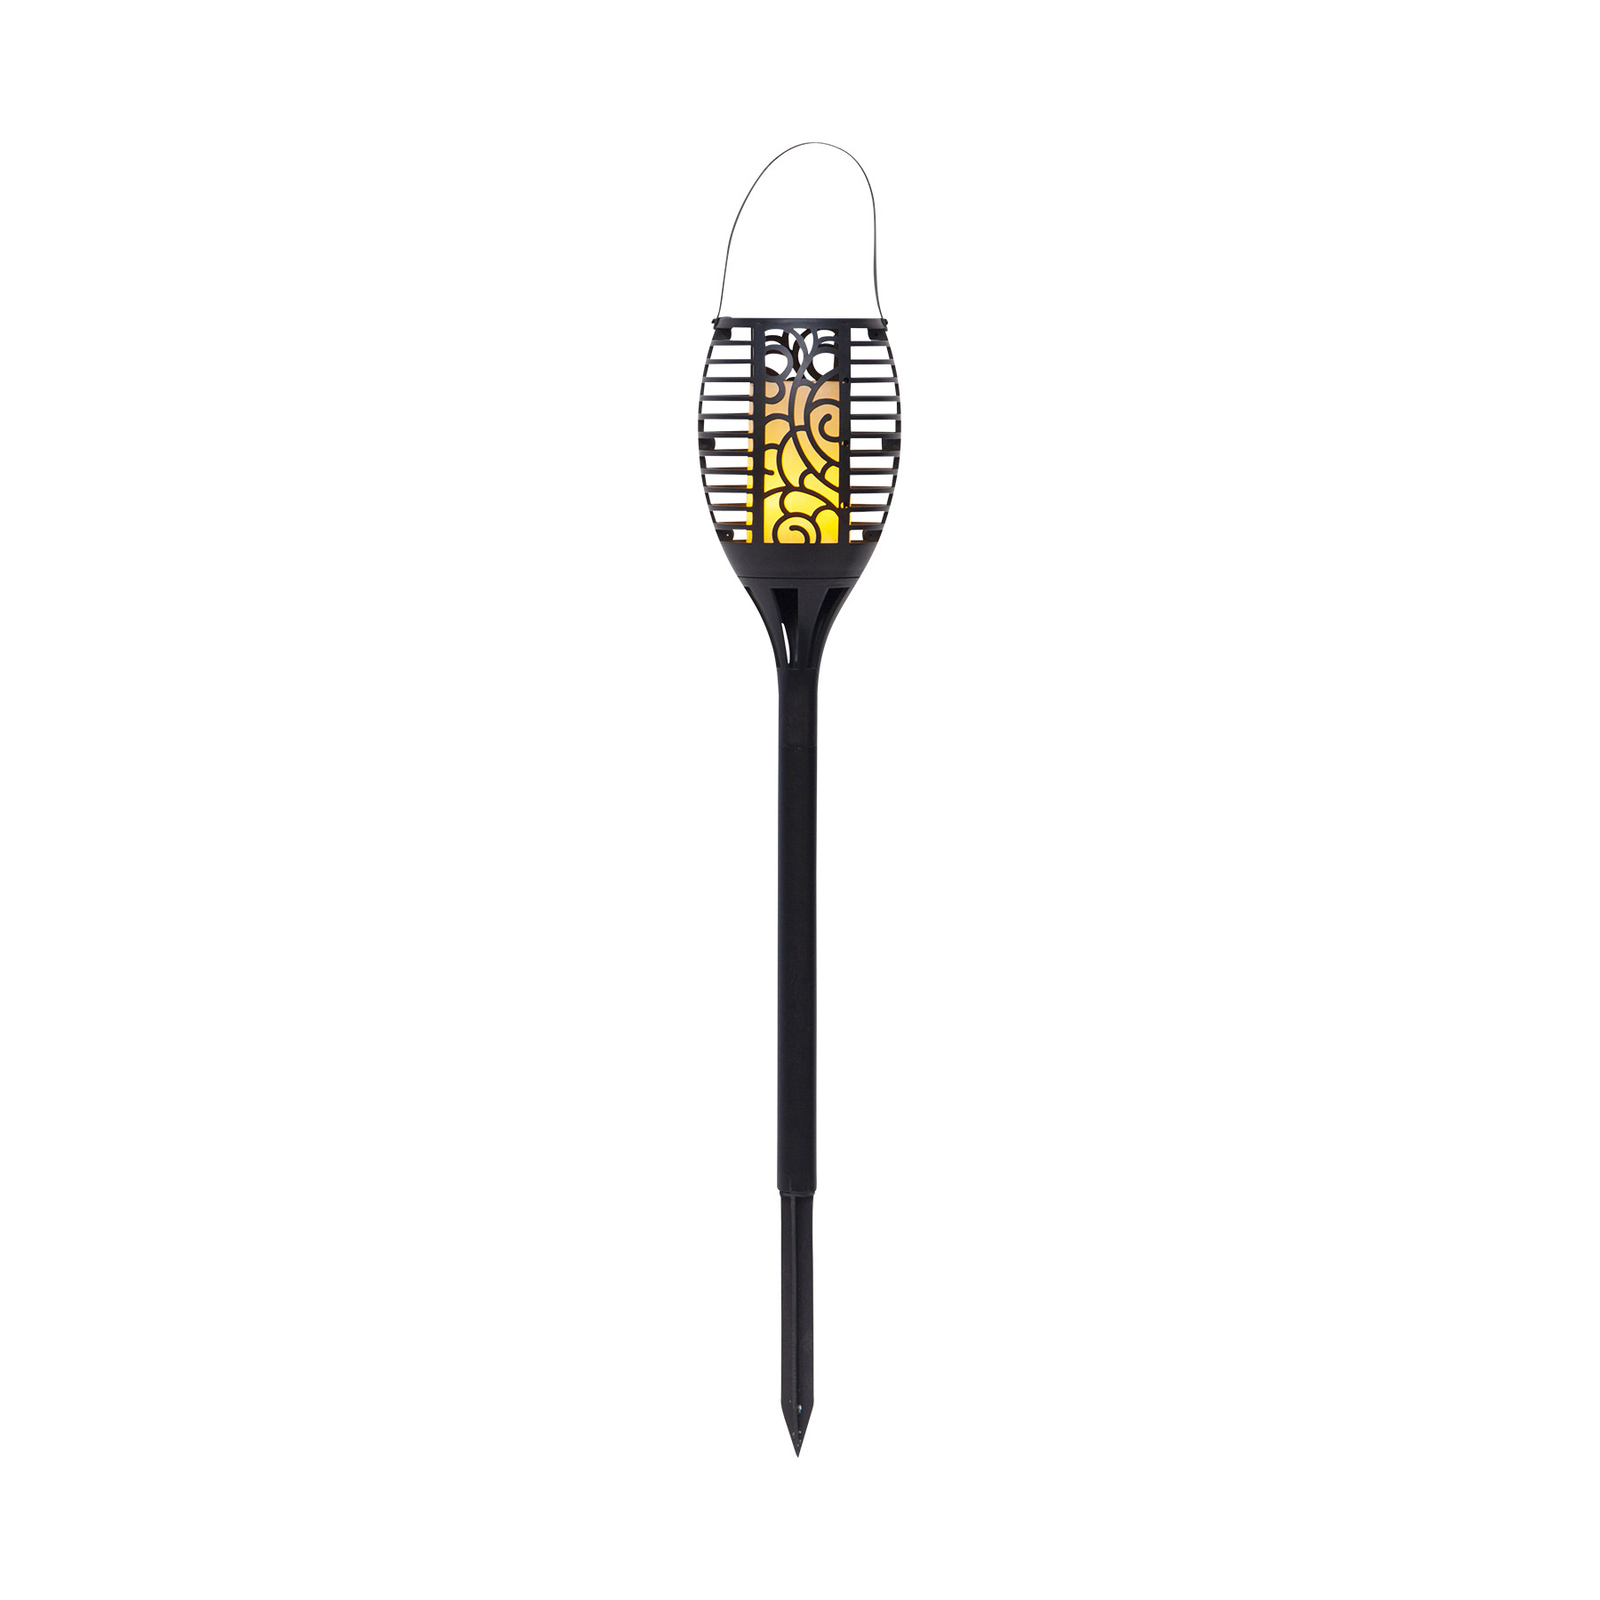 LED solarna lampa Flame, tri mogućnosti korištenja, 42 cm